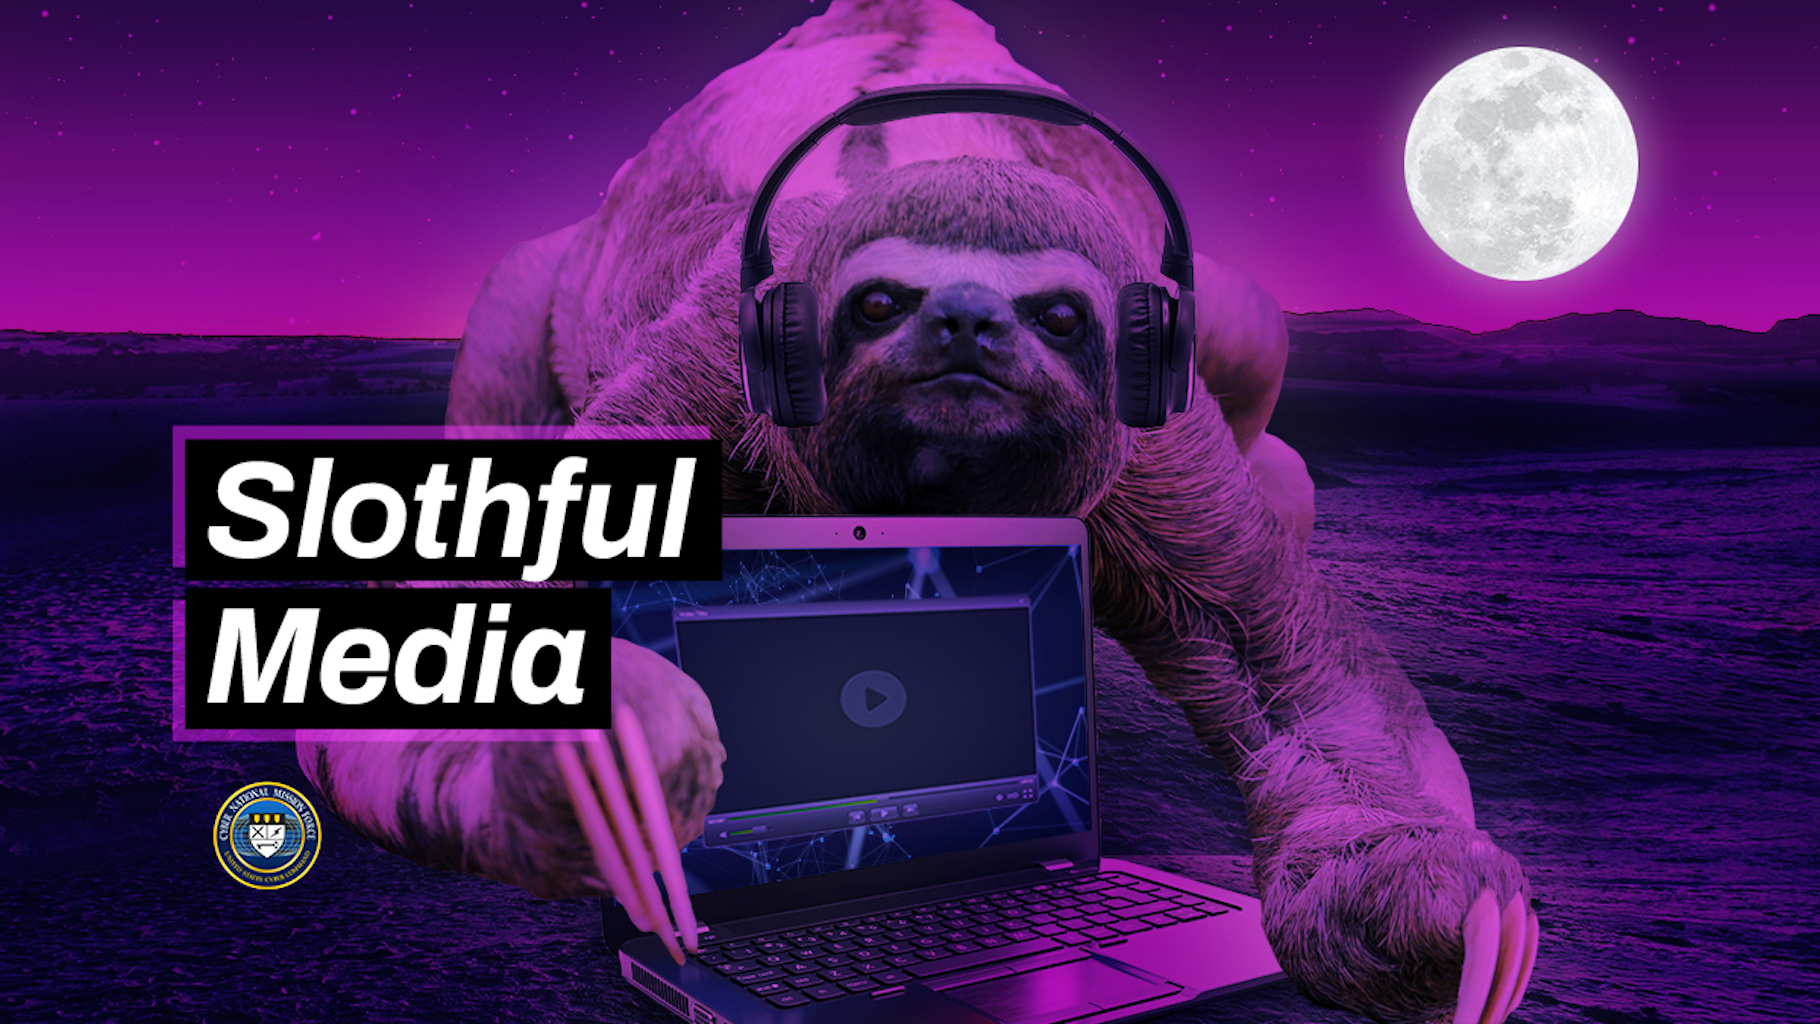 "SlothfulMedia" graphic prepared by U.S. Cyber Command.